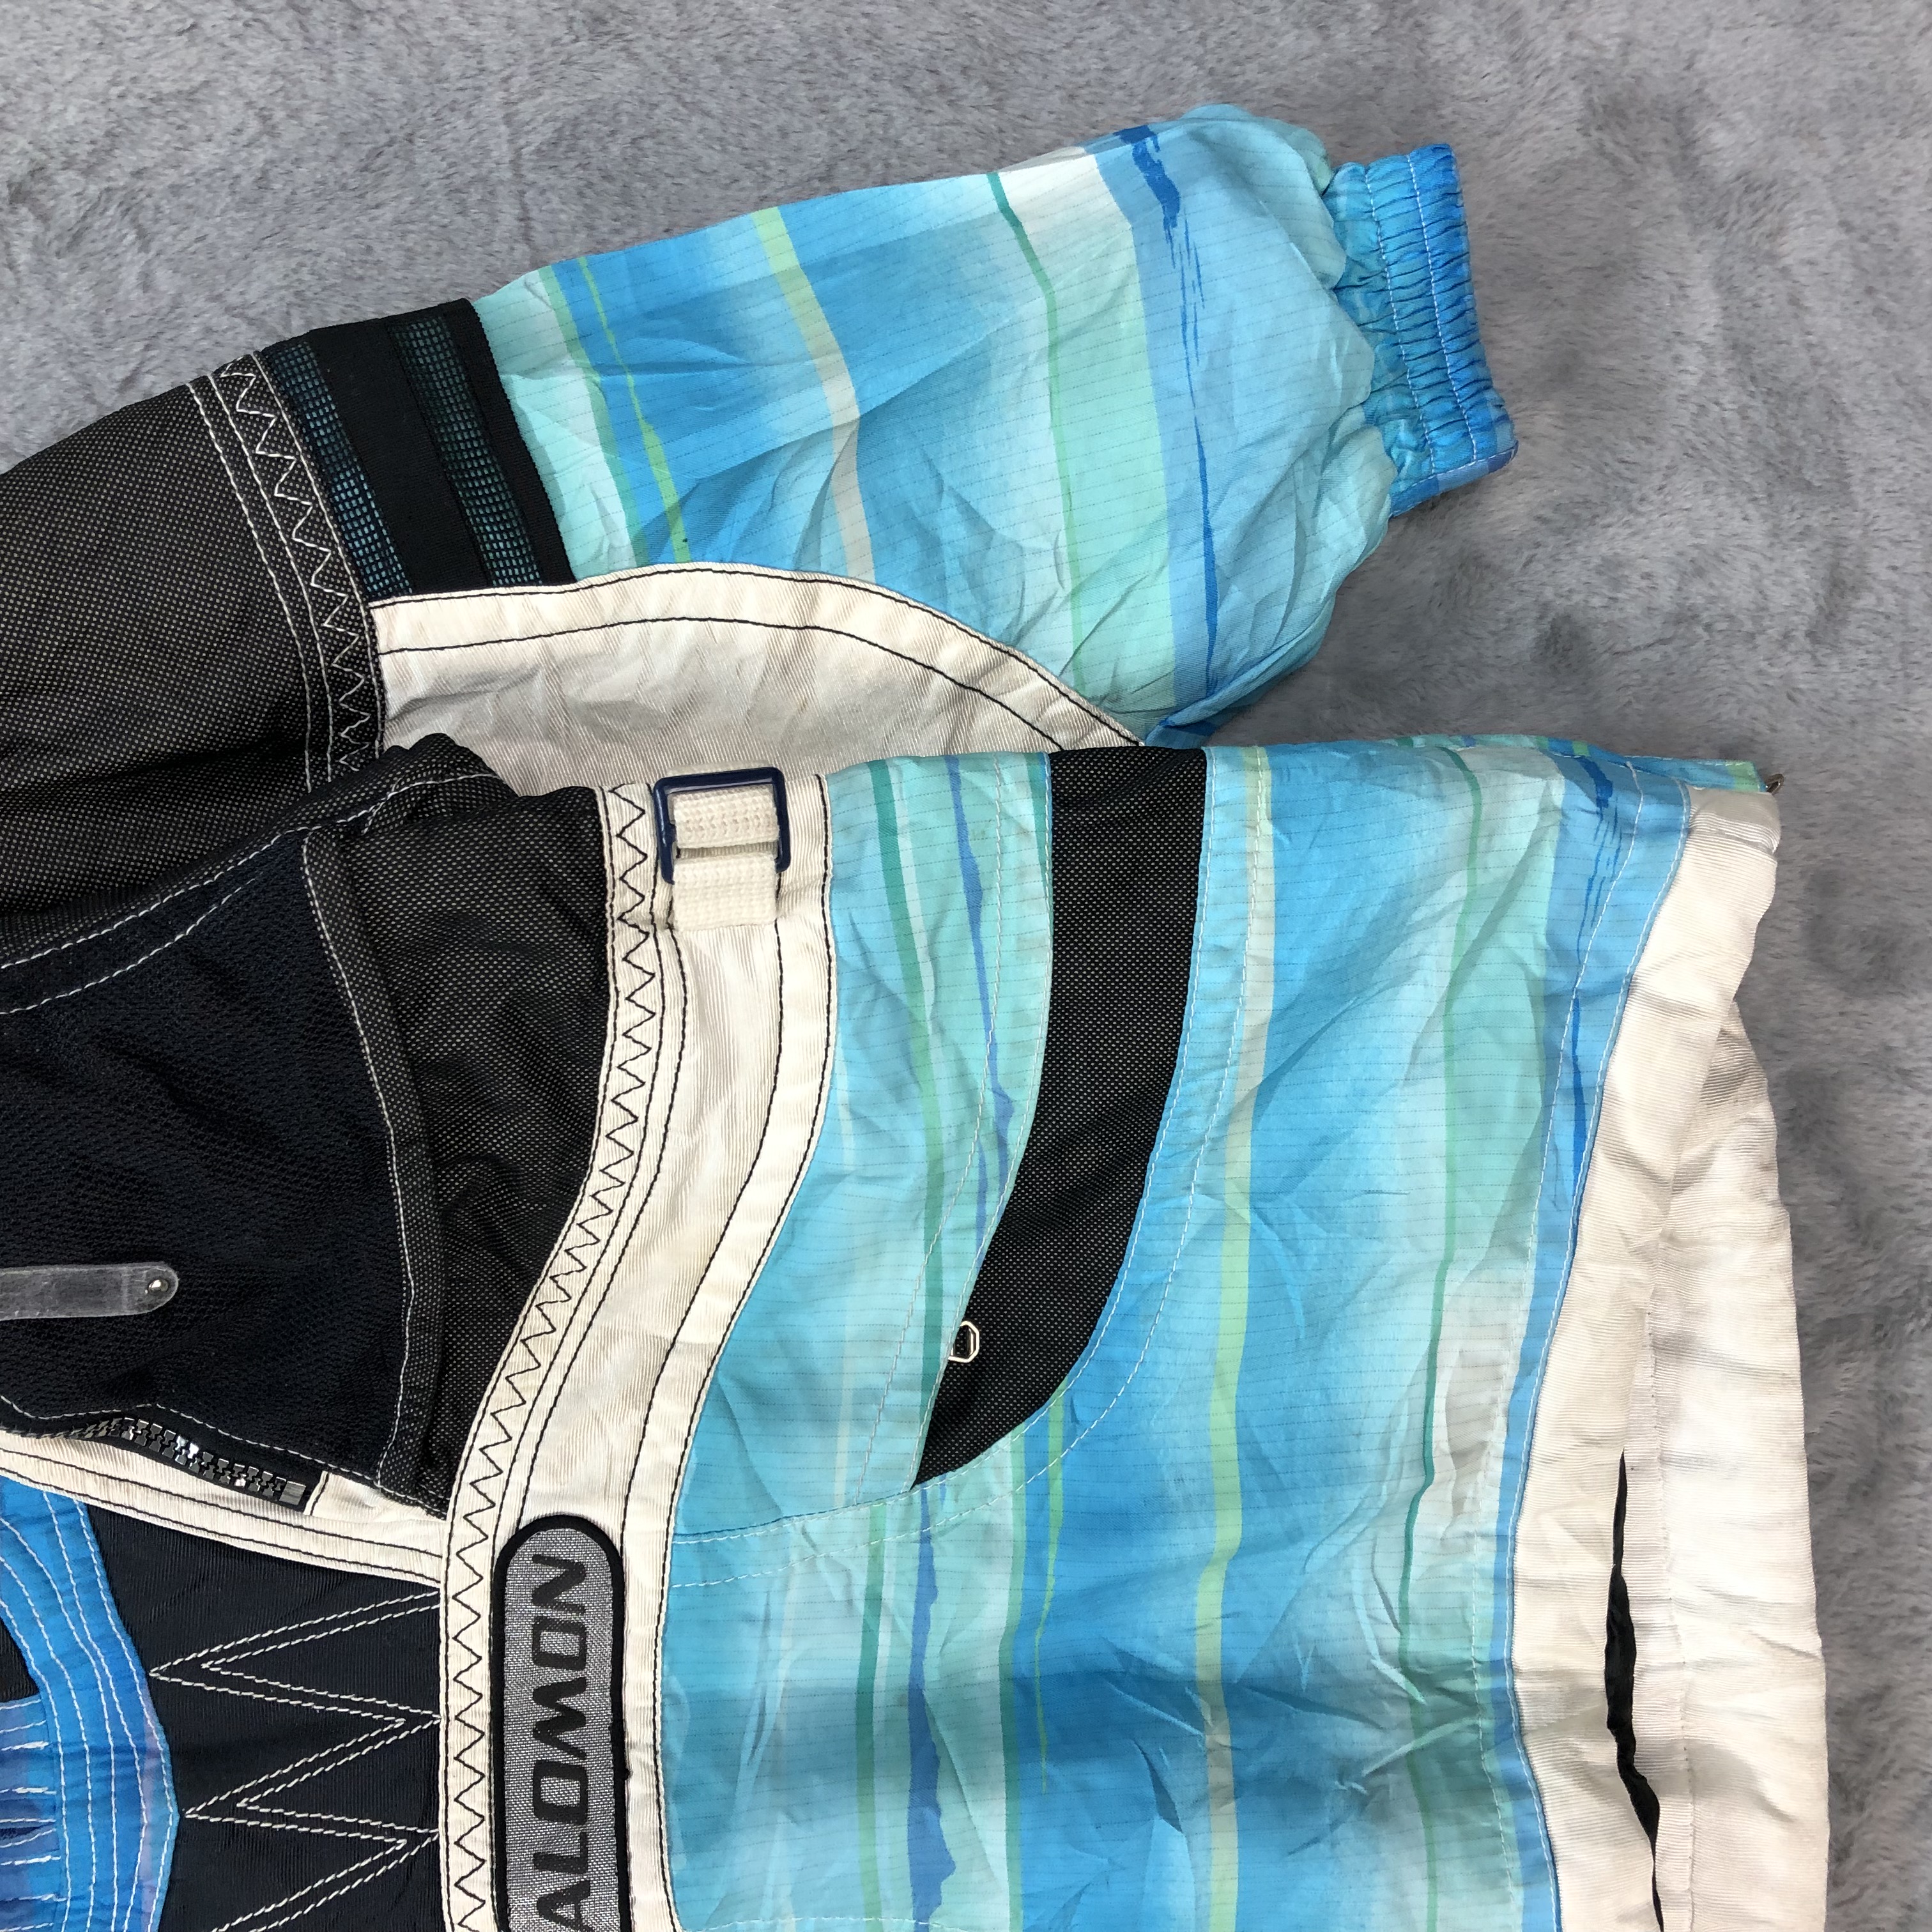 Salomon Optimal Movement Aqua Blue Ski Jacket #4748-167 - 8